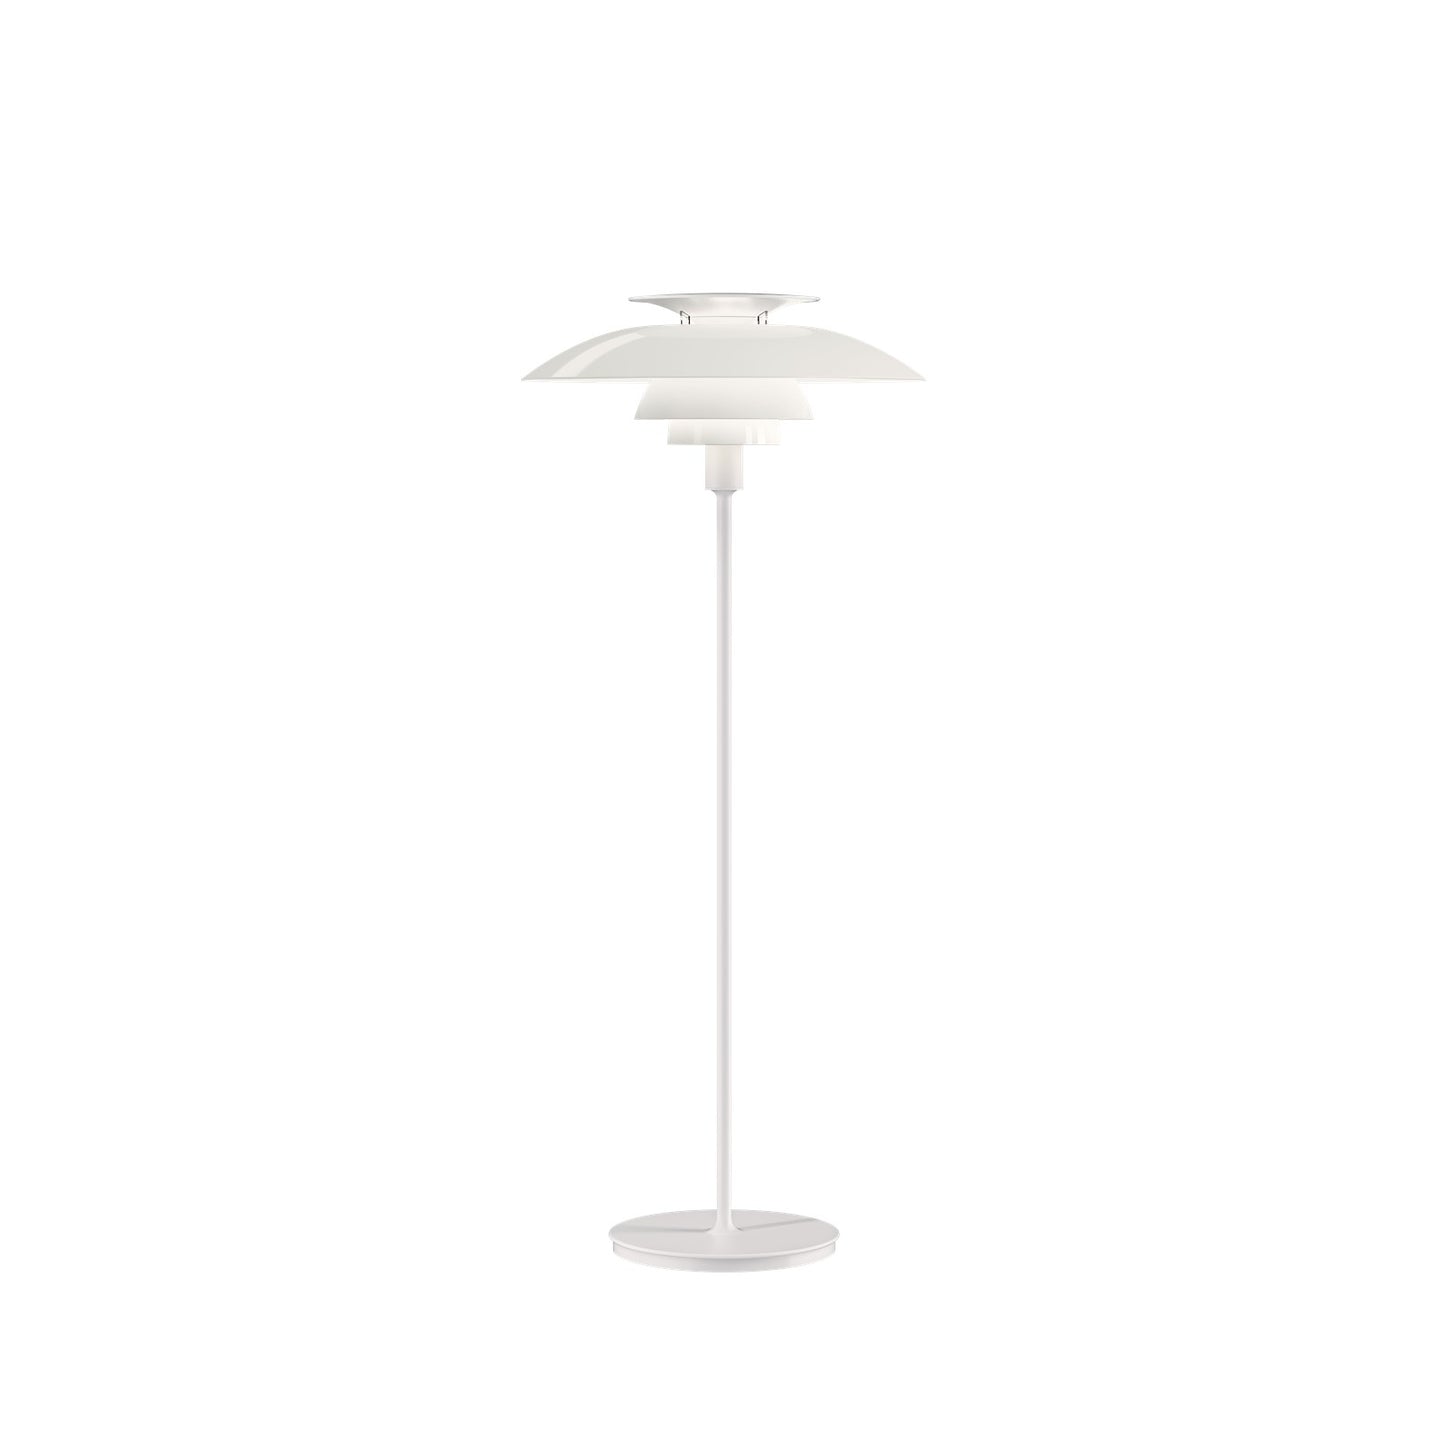 Floor lamp by Louis Poulsen